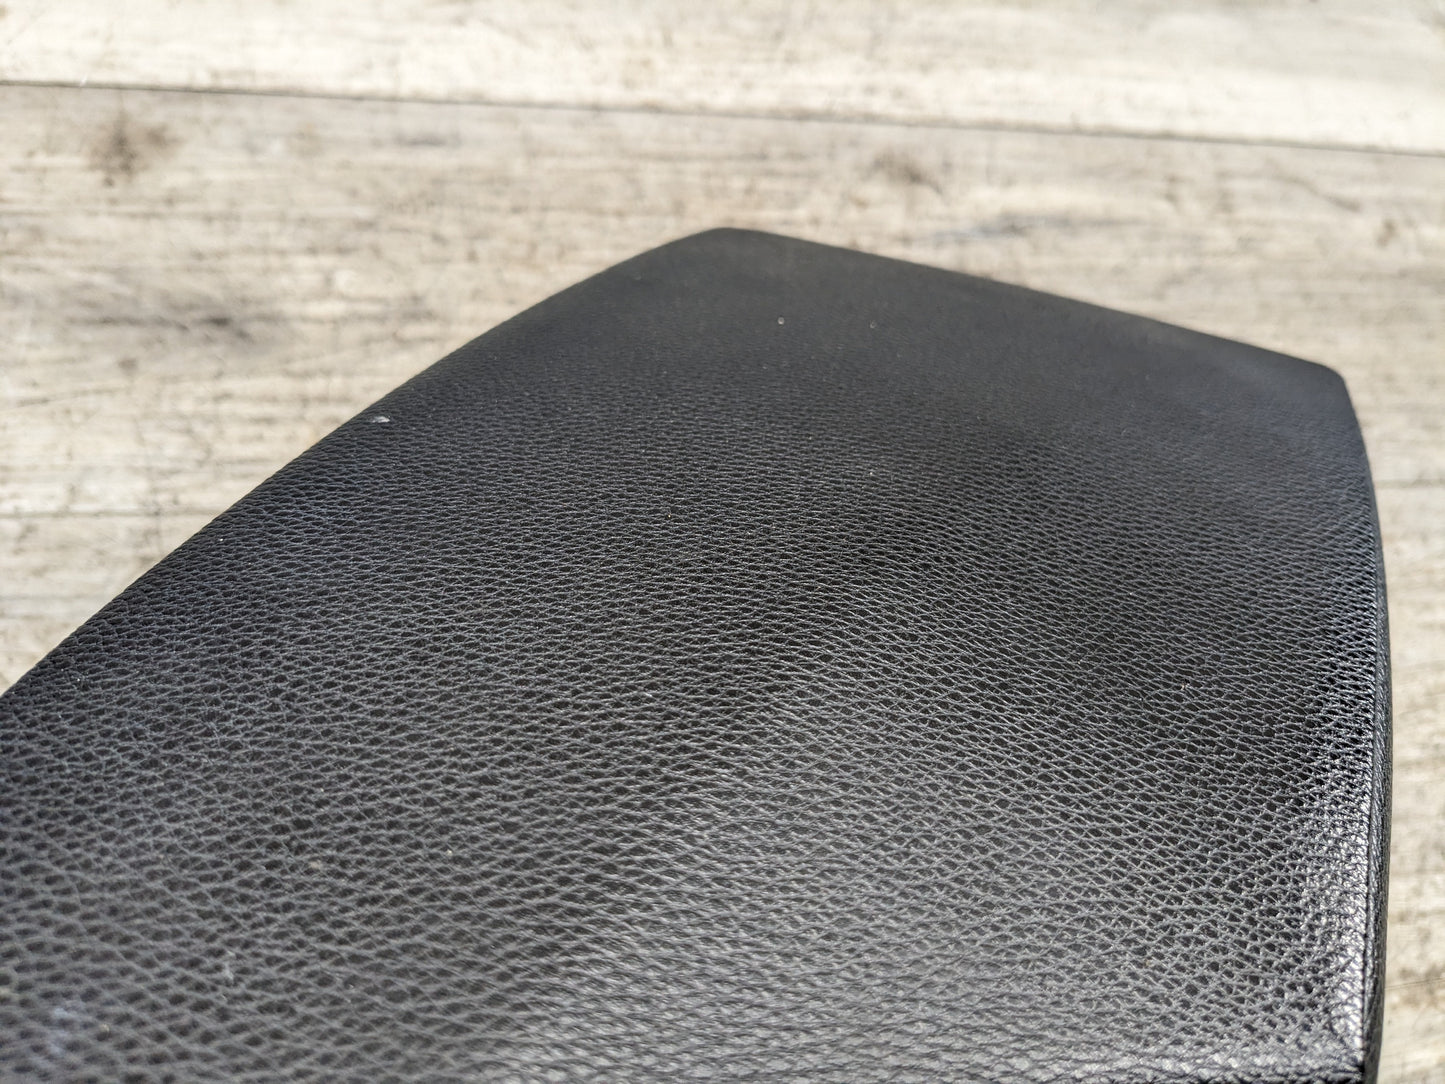 08-13 OEM BMW E88 E82 Center Console Armrest Tray BLACK Leather